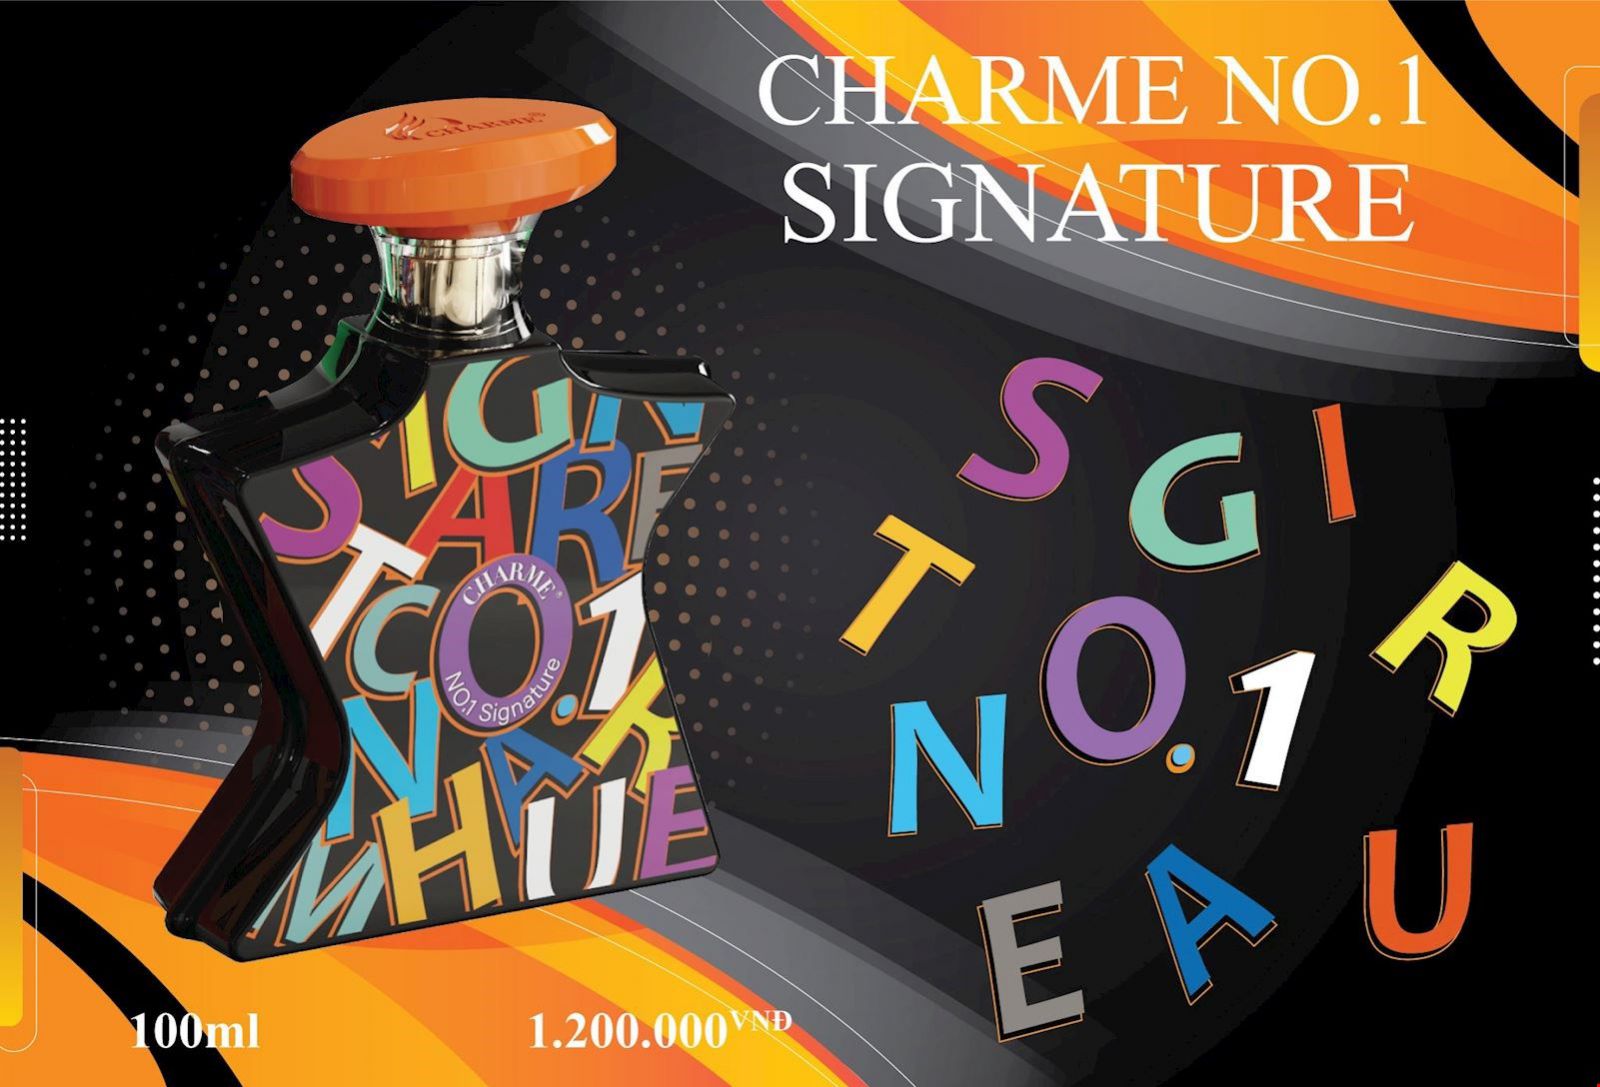 Charme No 1 Signature 100ml